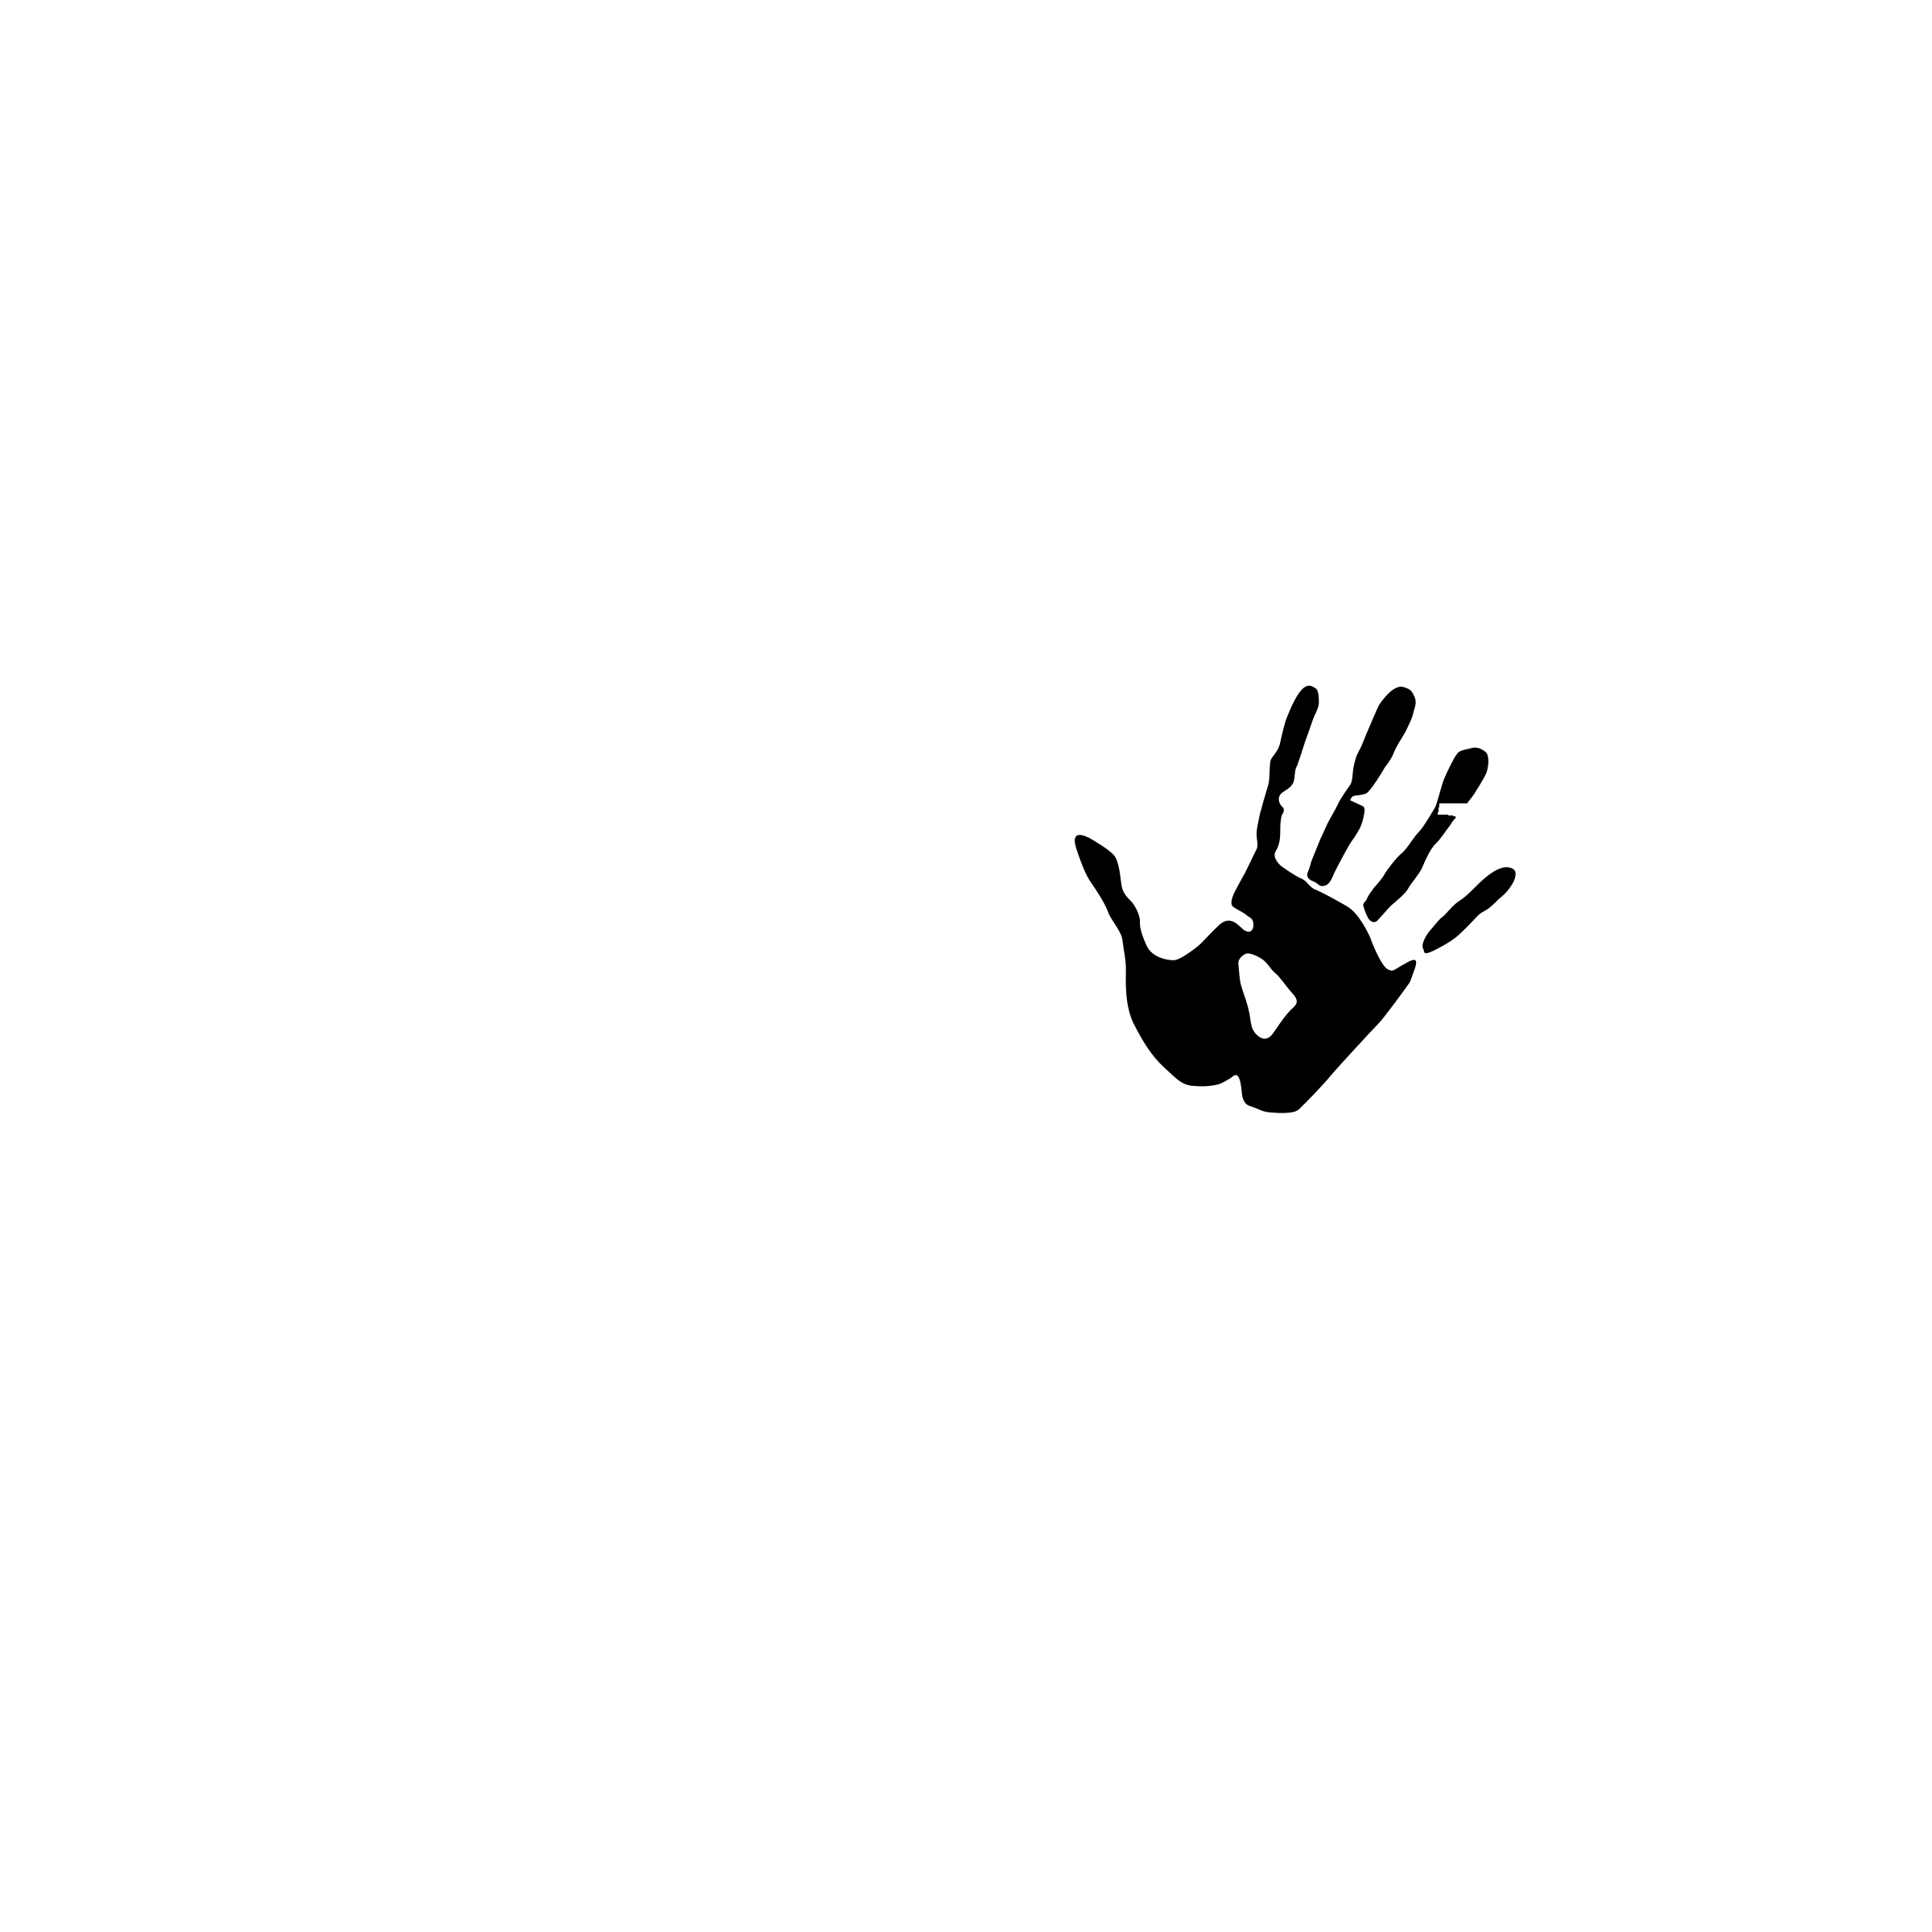 HandsUp Logo - Hands Up Logo PNG Transparent & SVG Vector - Freebie Supply